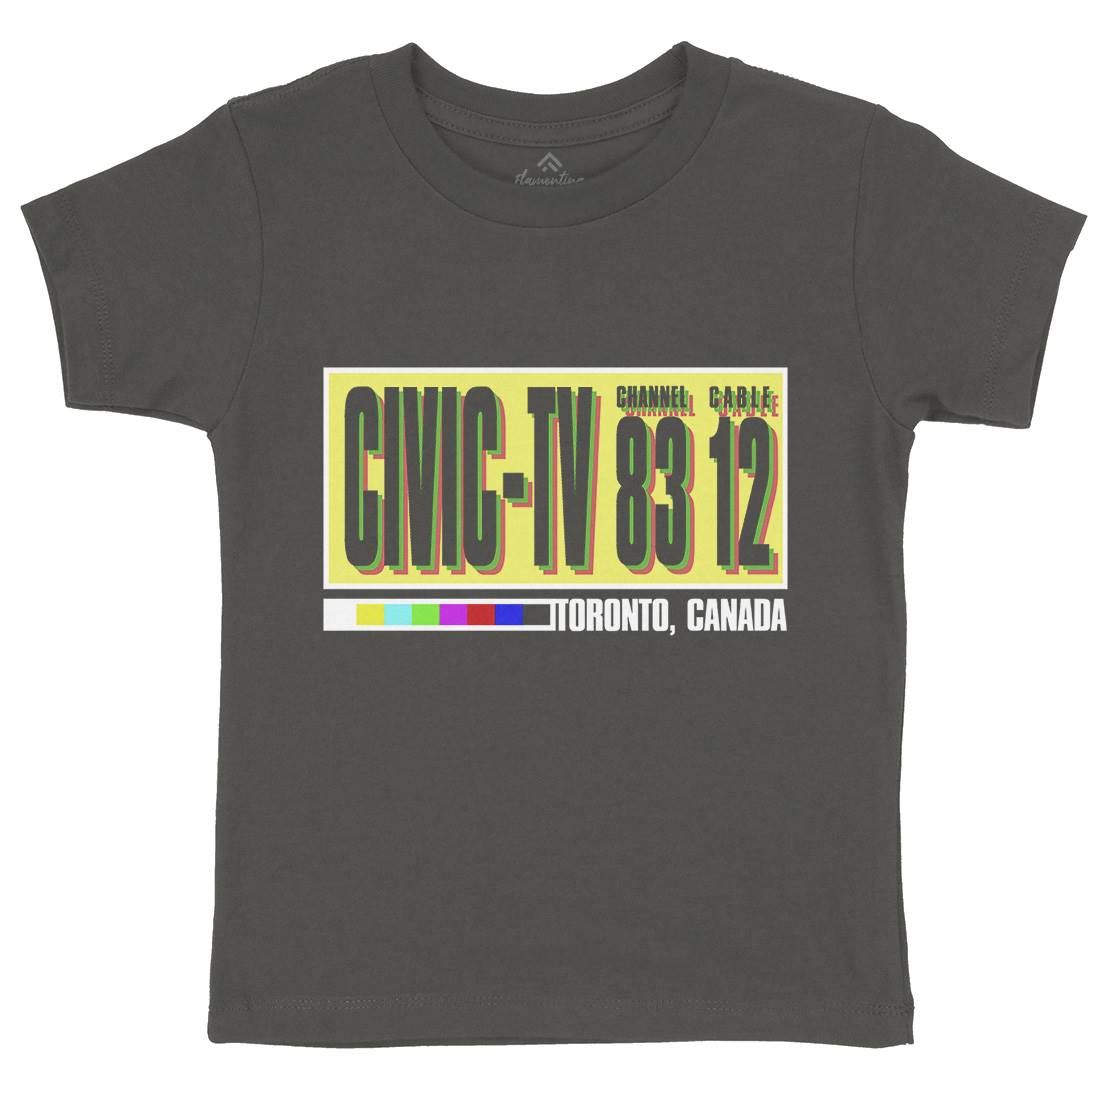 Civic-Tv Kids Organic Crew Neck T-Shirt Media D406